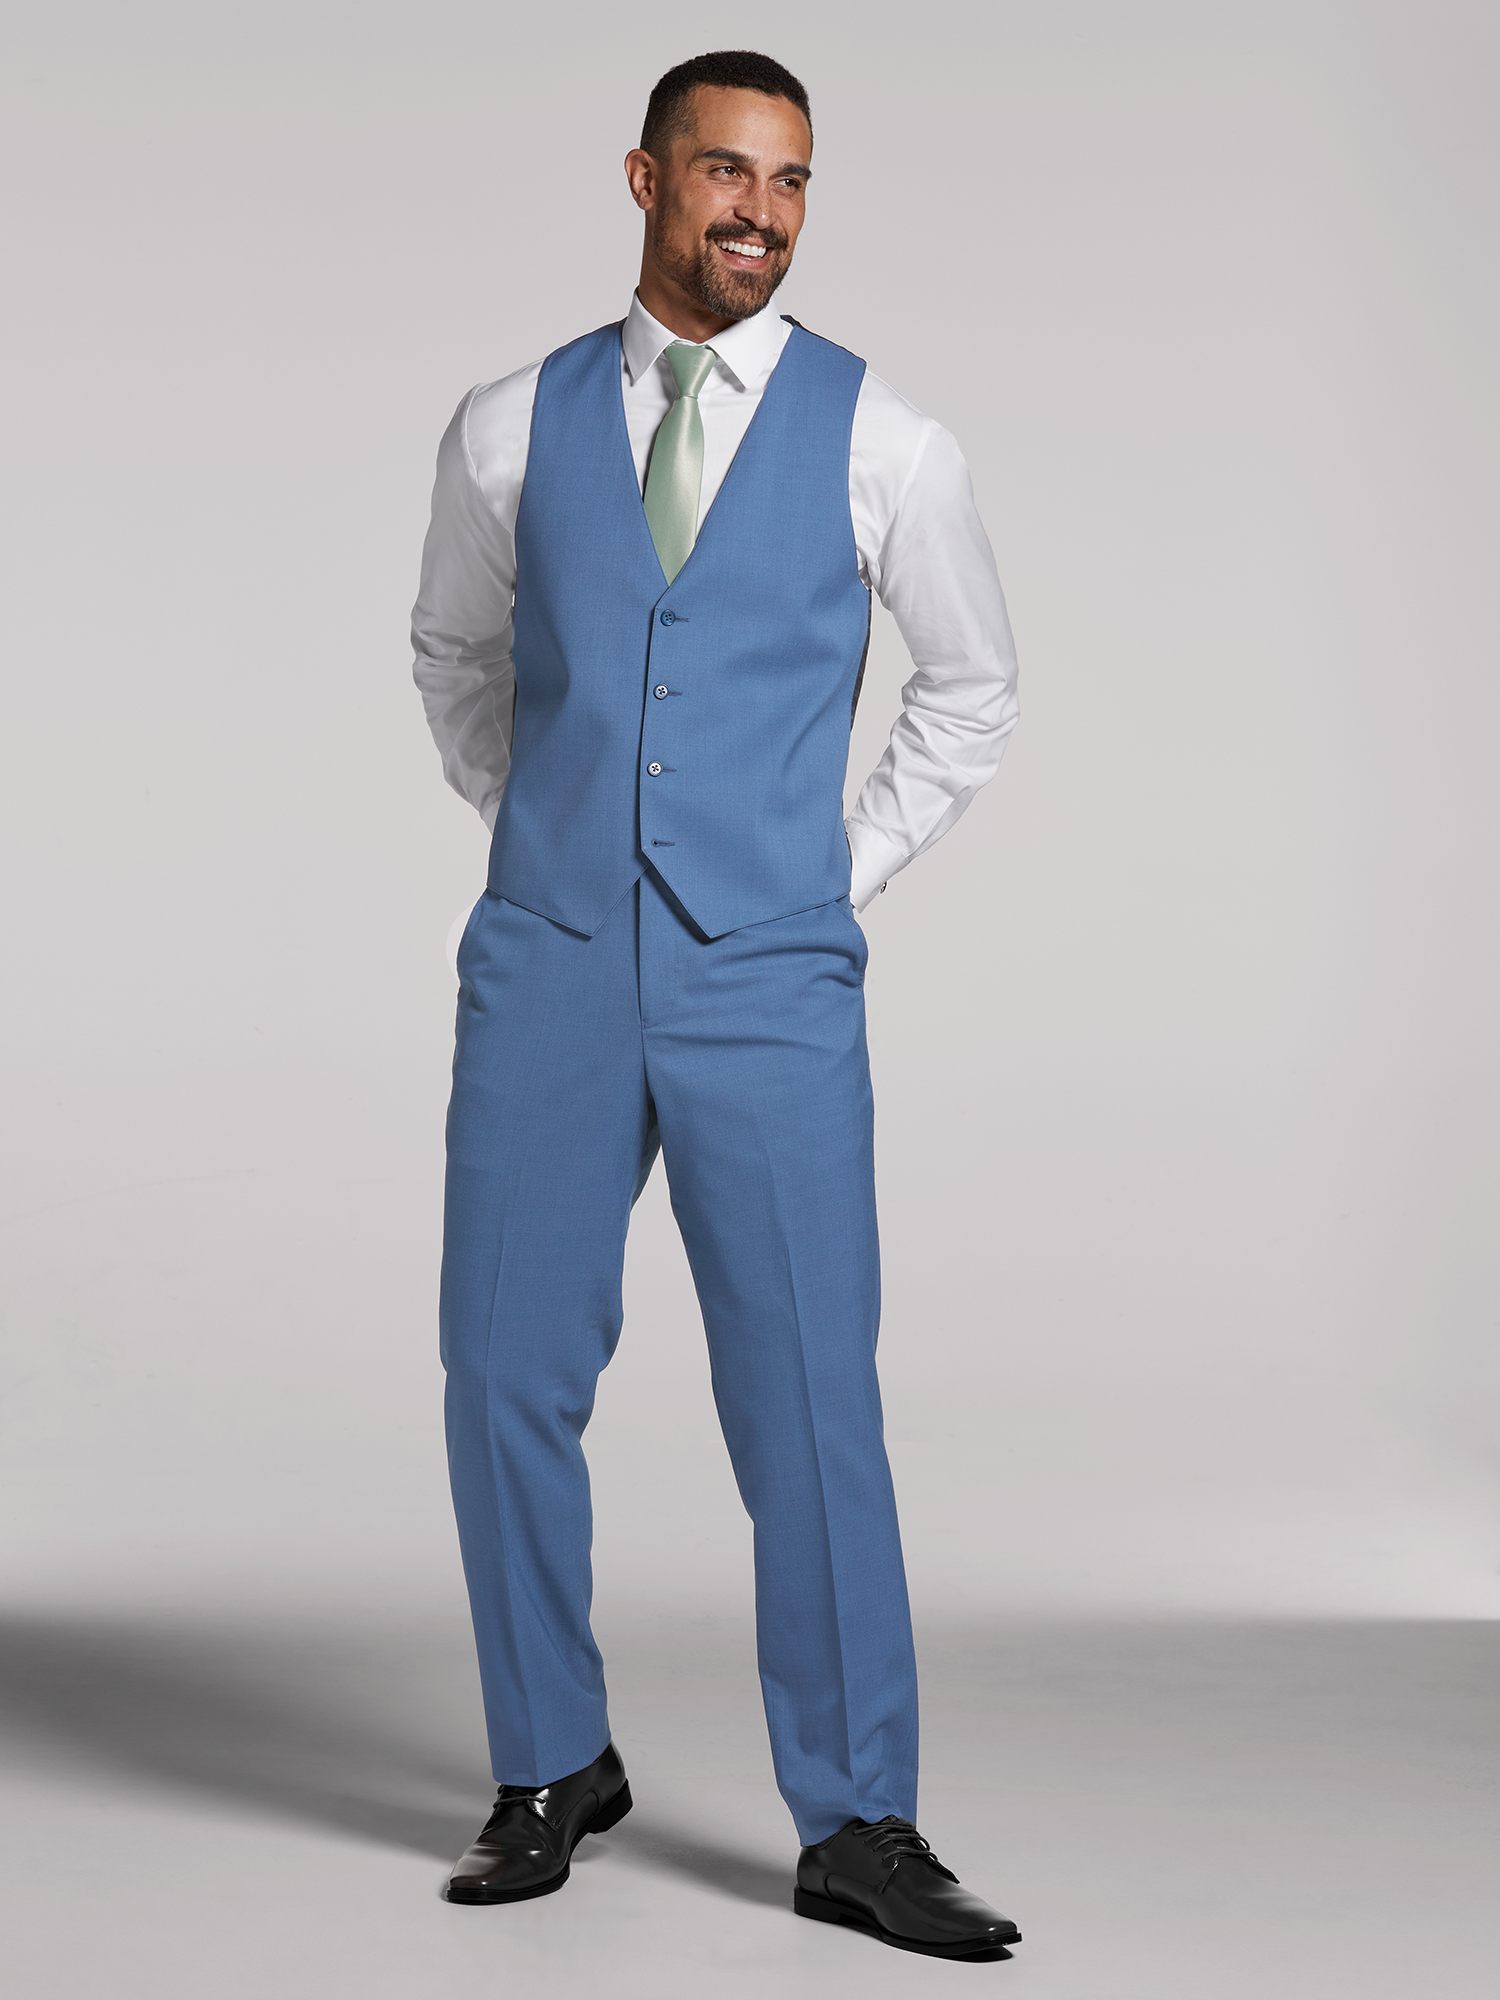 Calvin Klein Boys' 2-Piece Formal Suit Set - Size 14 NWT BRT BLUE